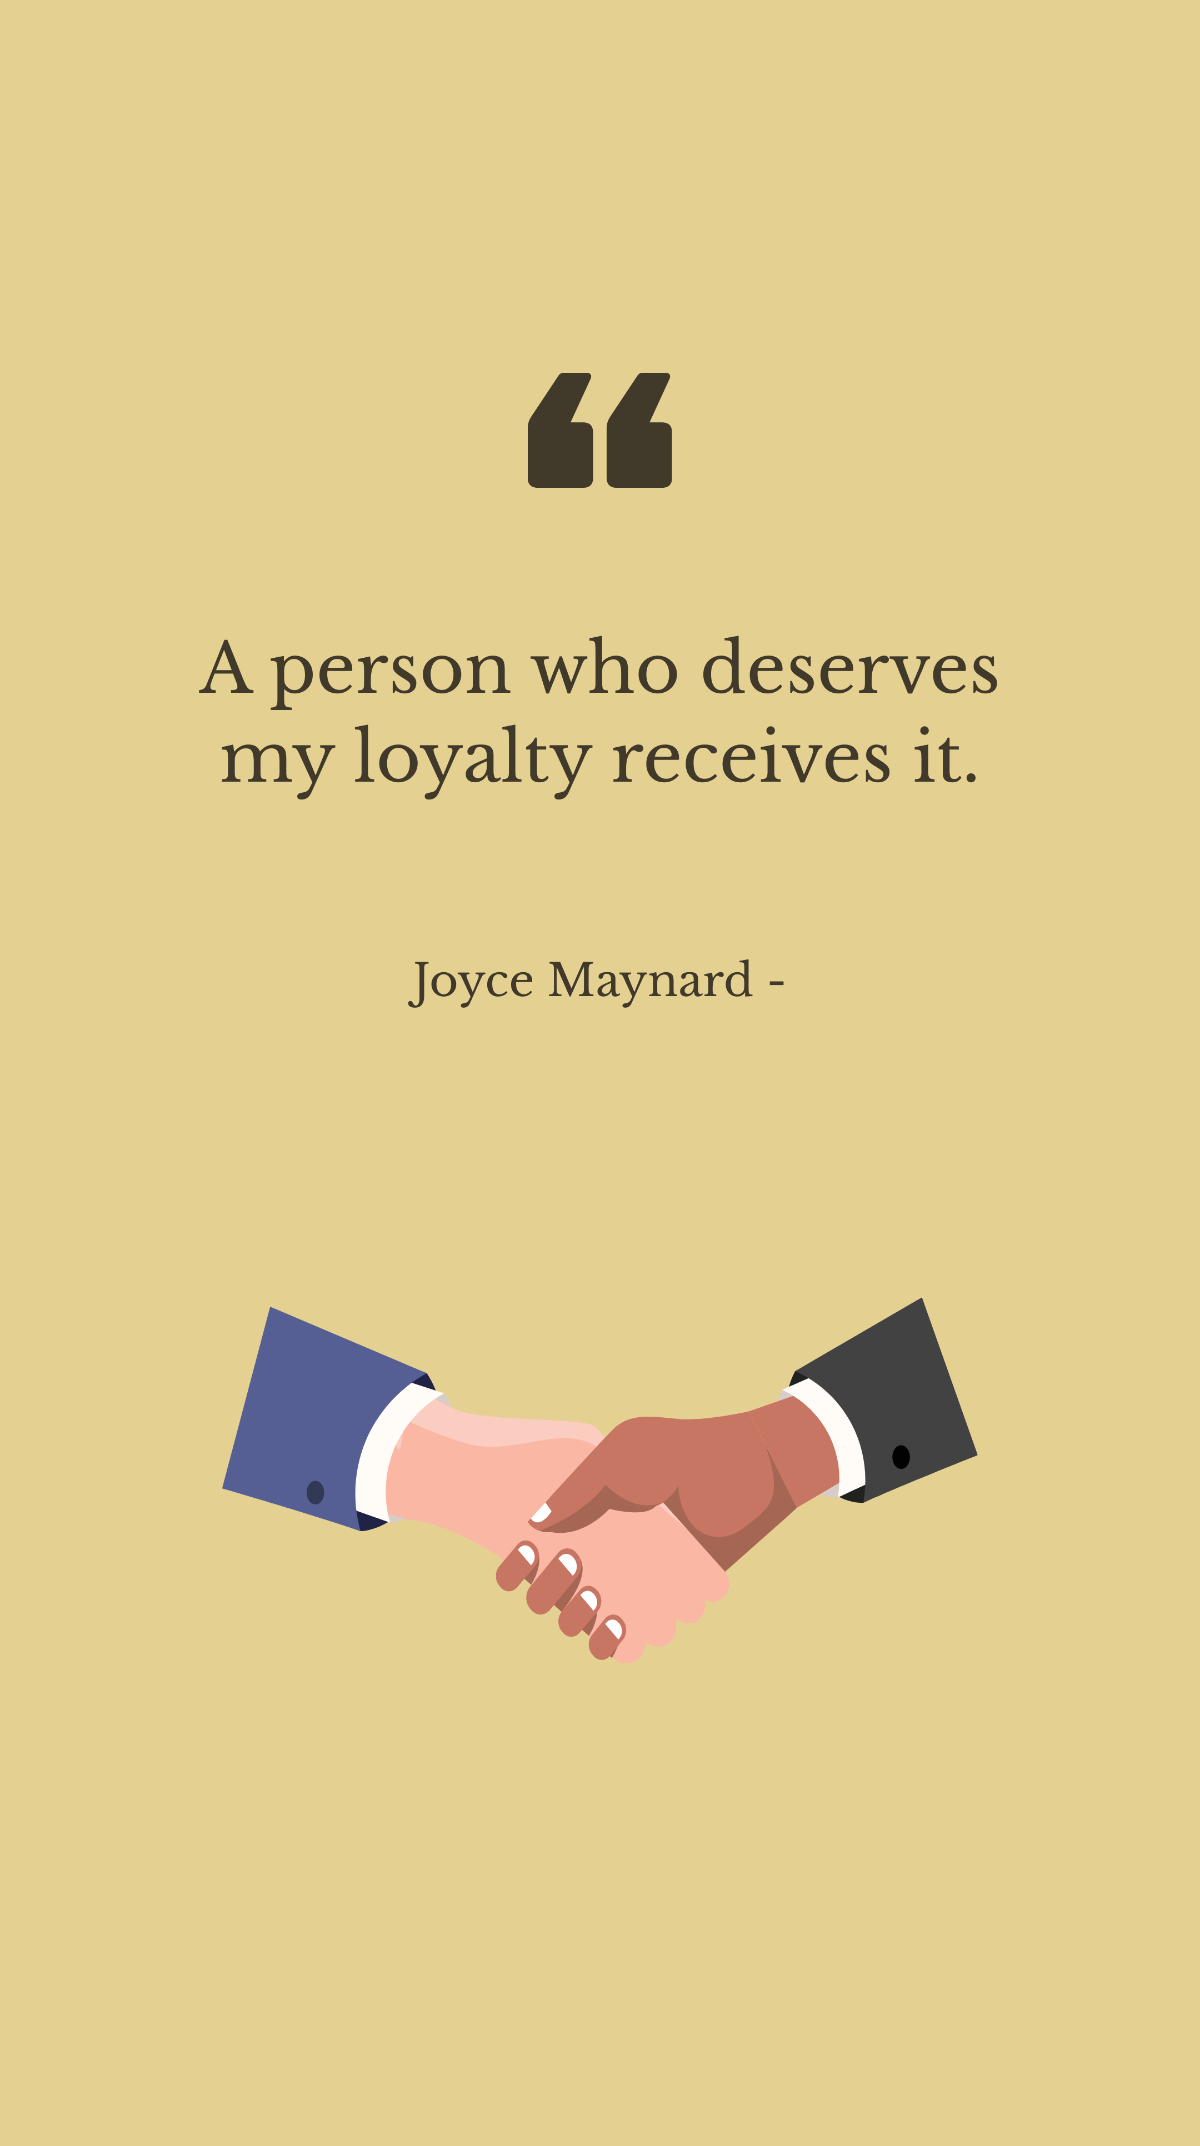 Joyce Maynard - A person who deserves my loyalty receives it.